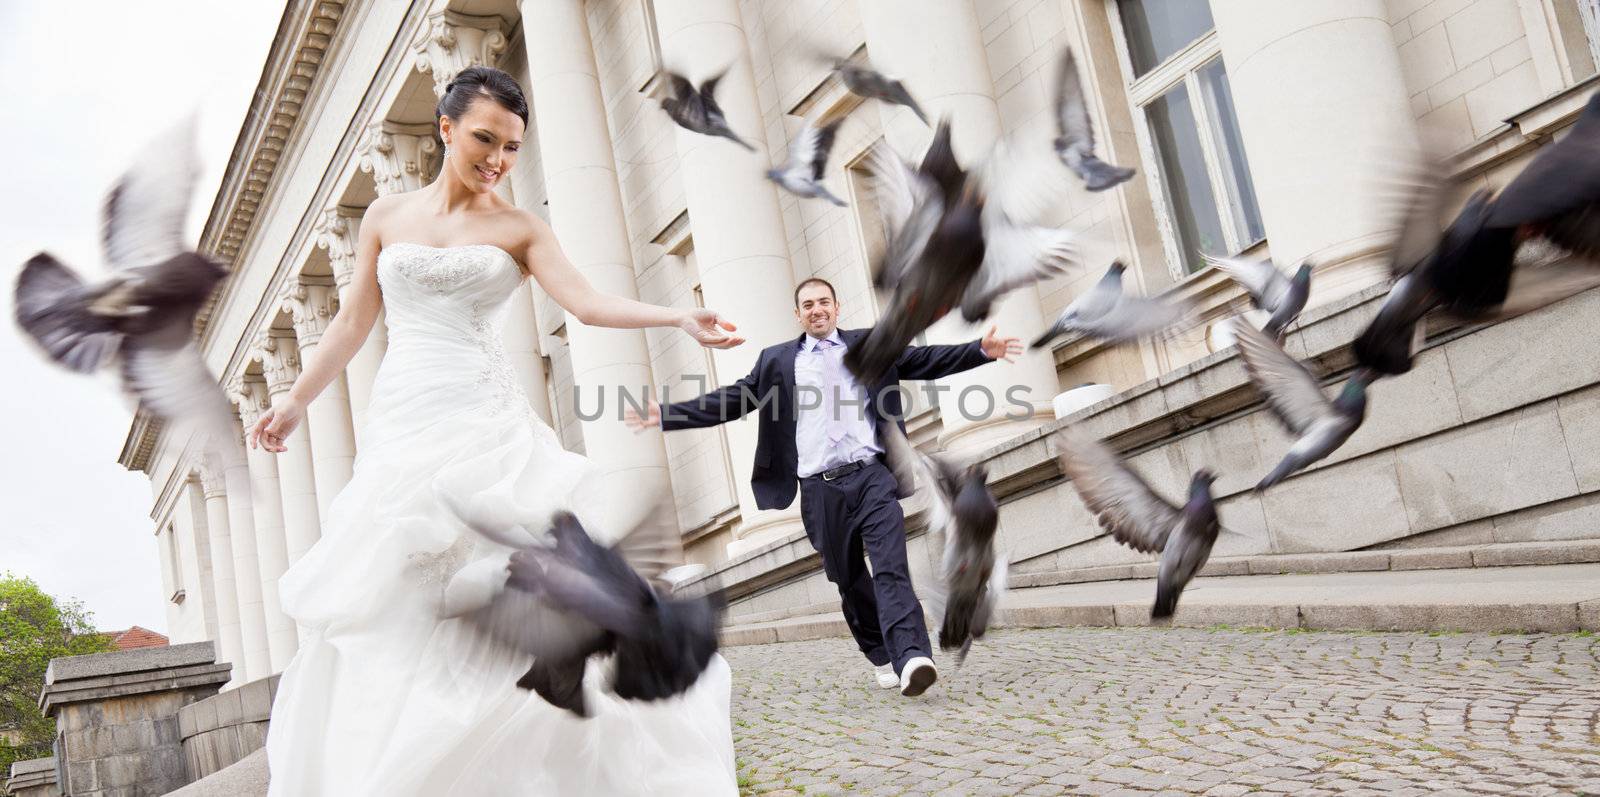 Bride and groom walking behind doves by vilevi